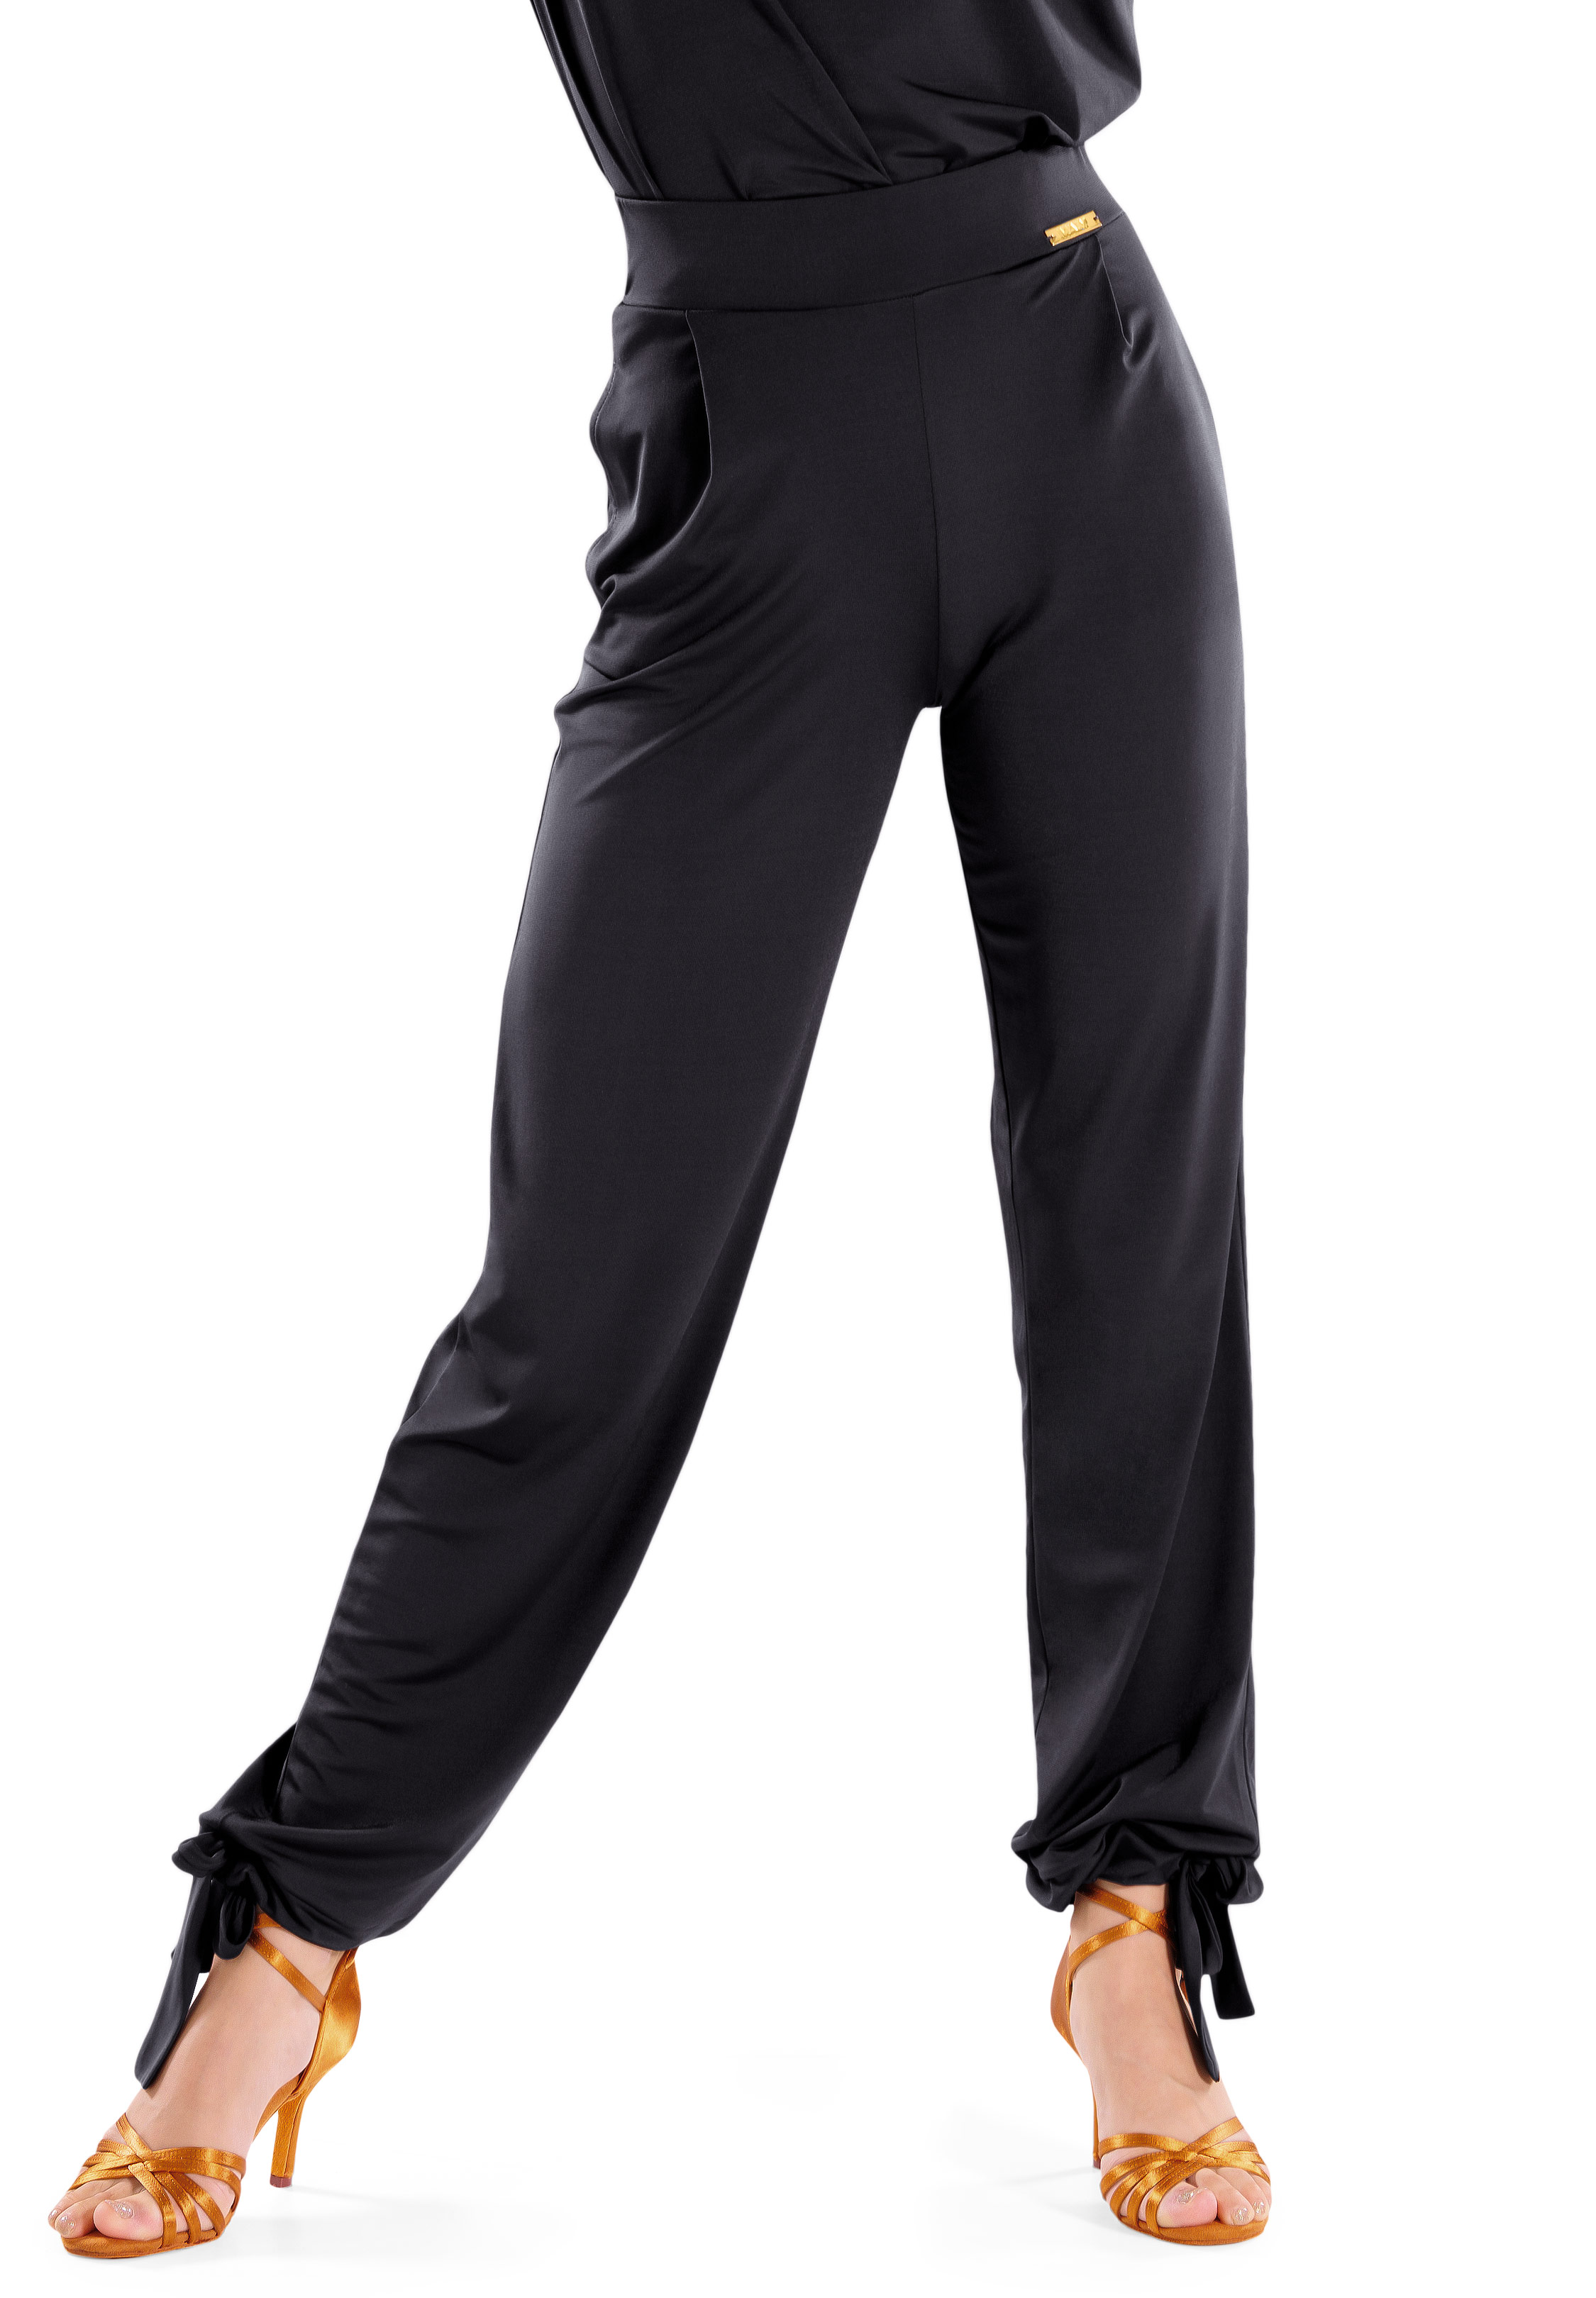 Buy The Dance Bible Women Yin Harem Pants Solid Loose Fit Dance Yoga  Pilates Trousers online